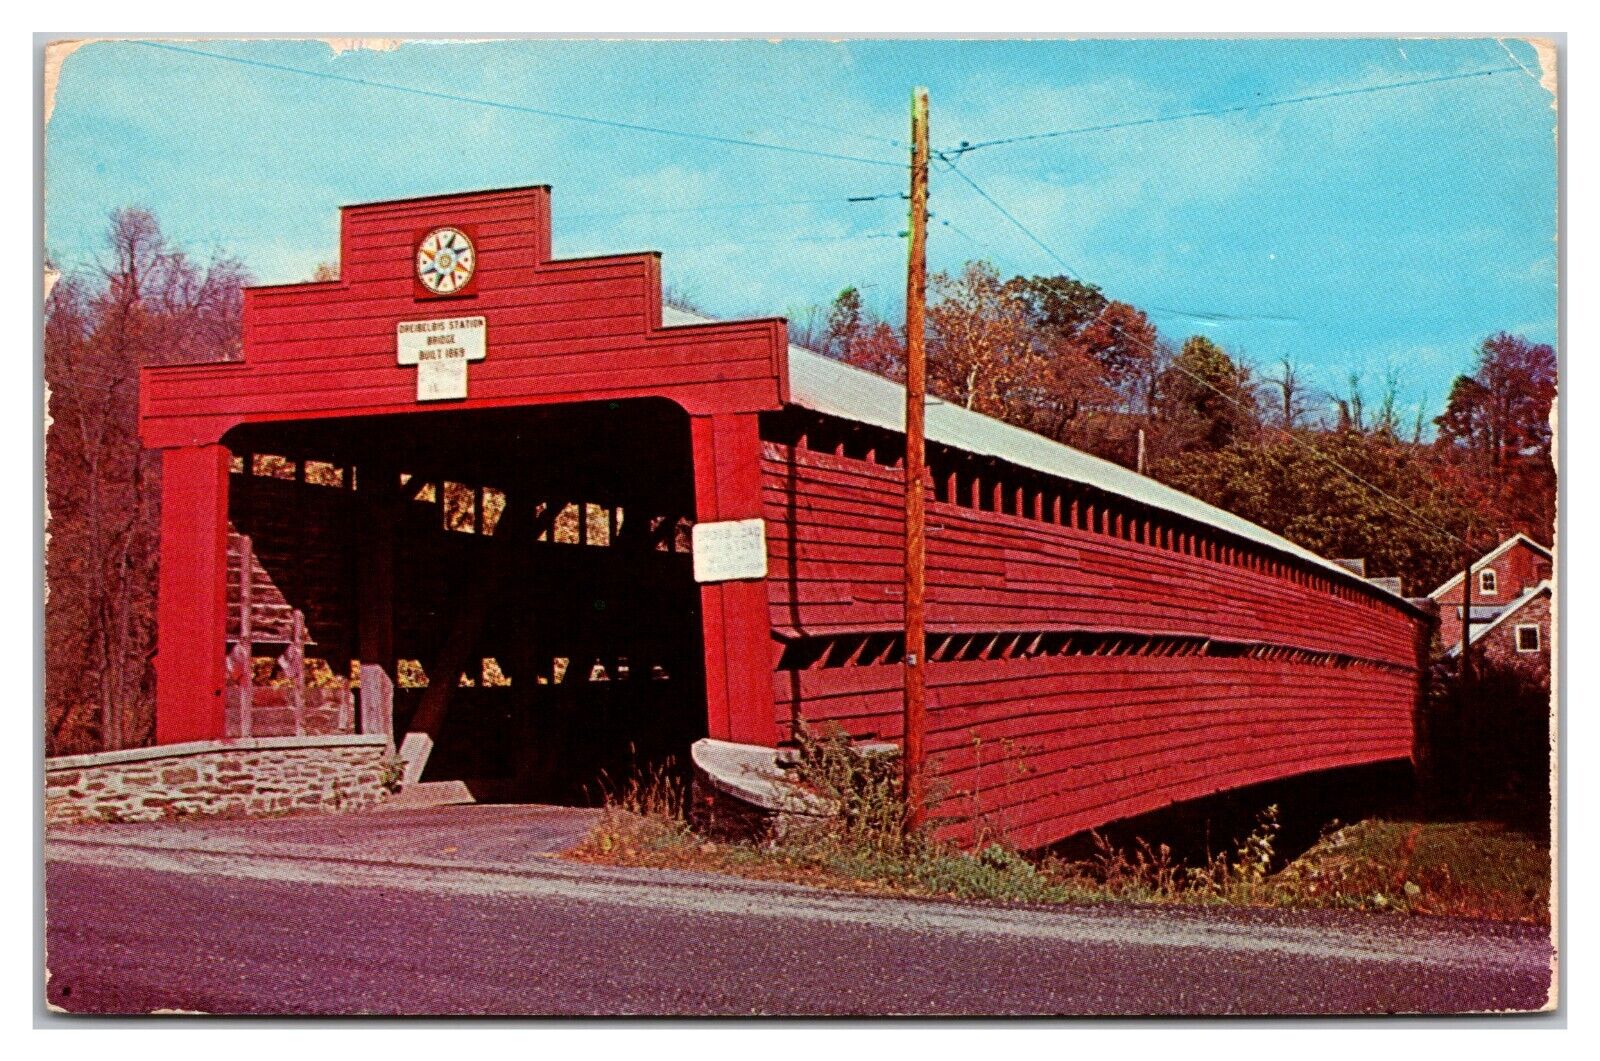 Dreibelbis Station Covered Bridge Postcard